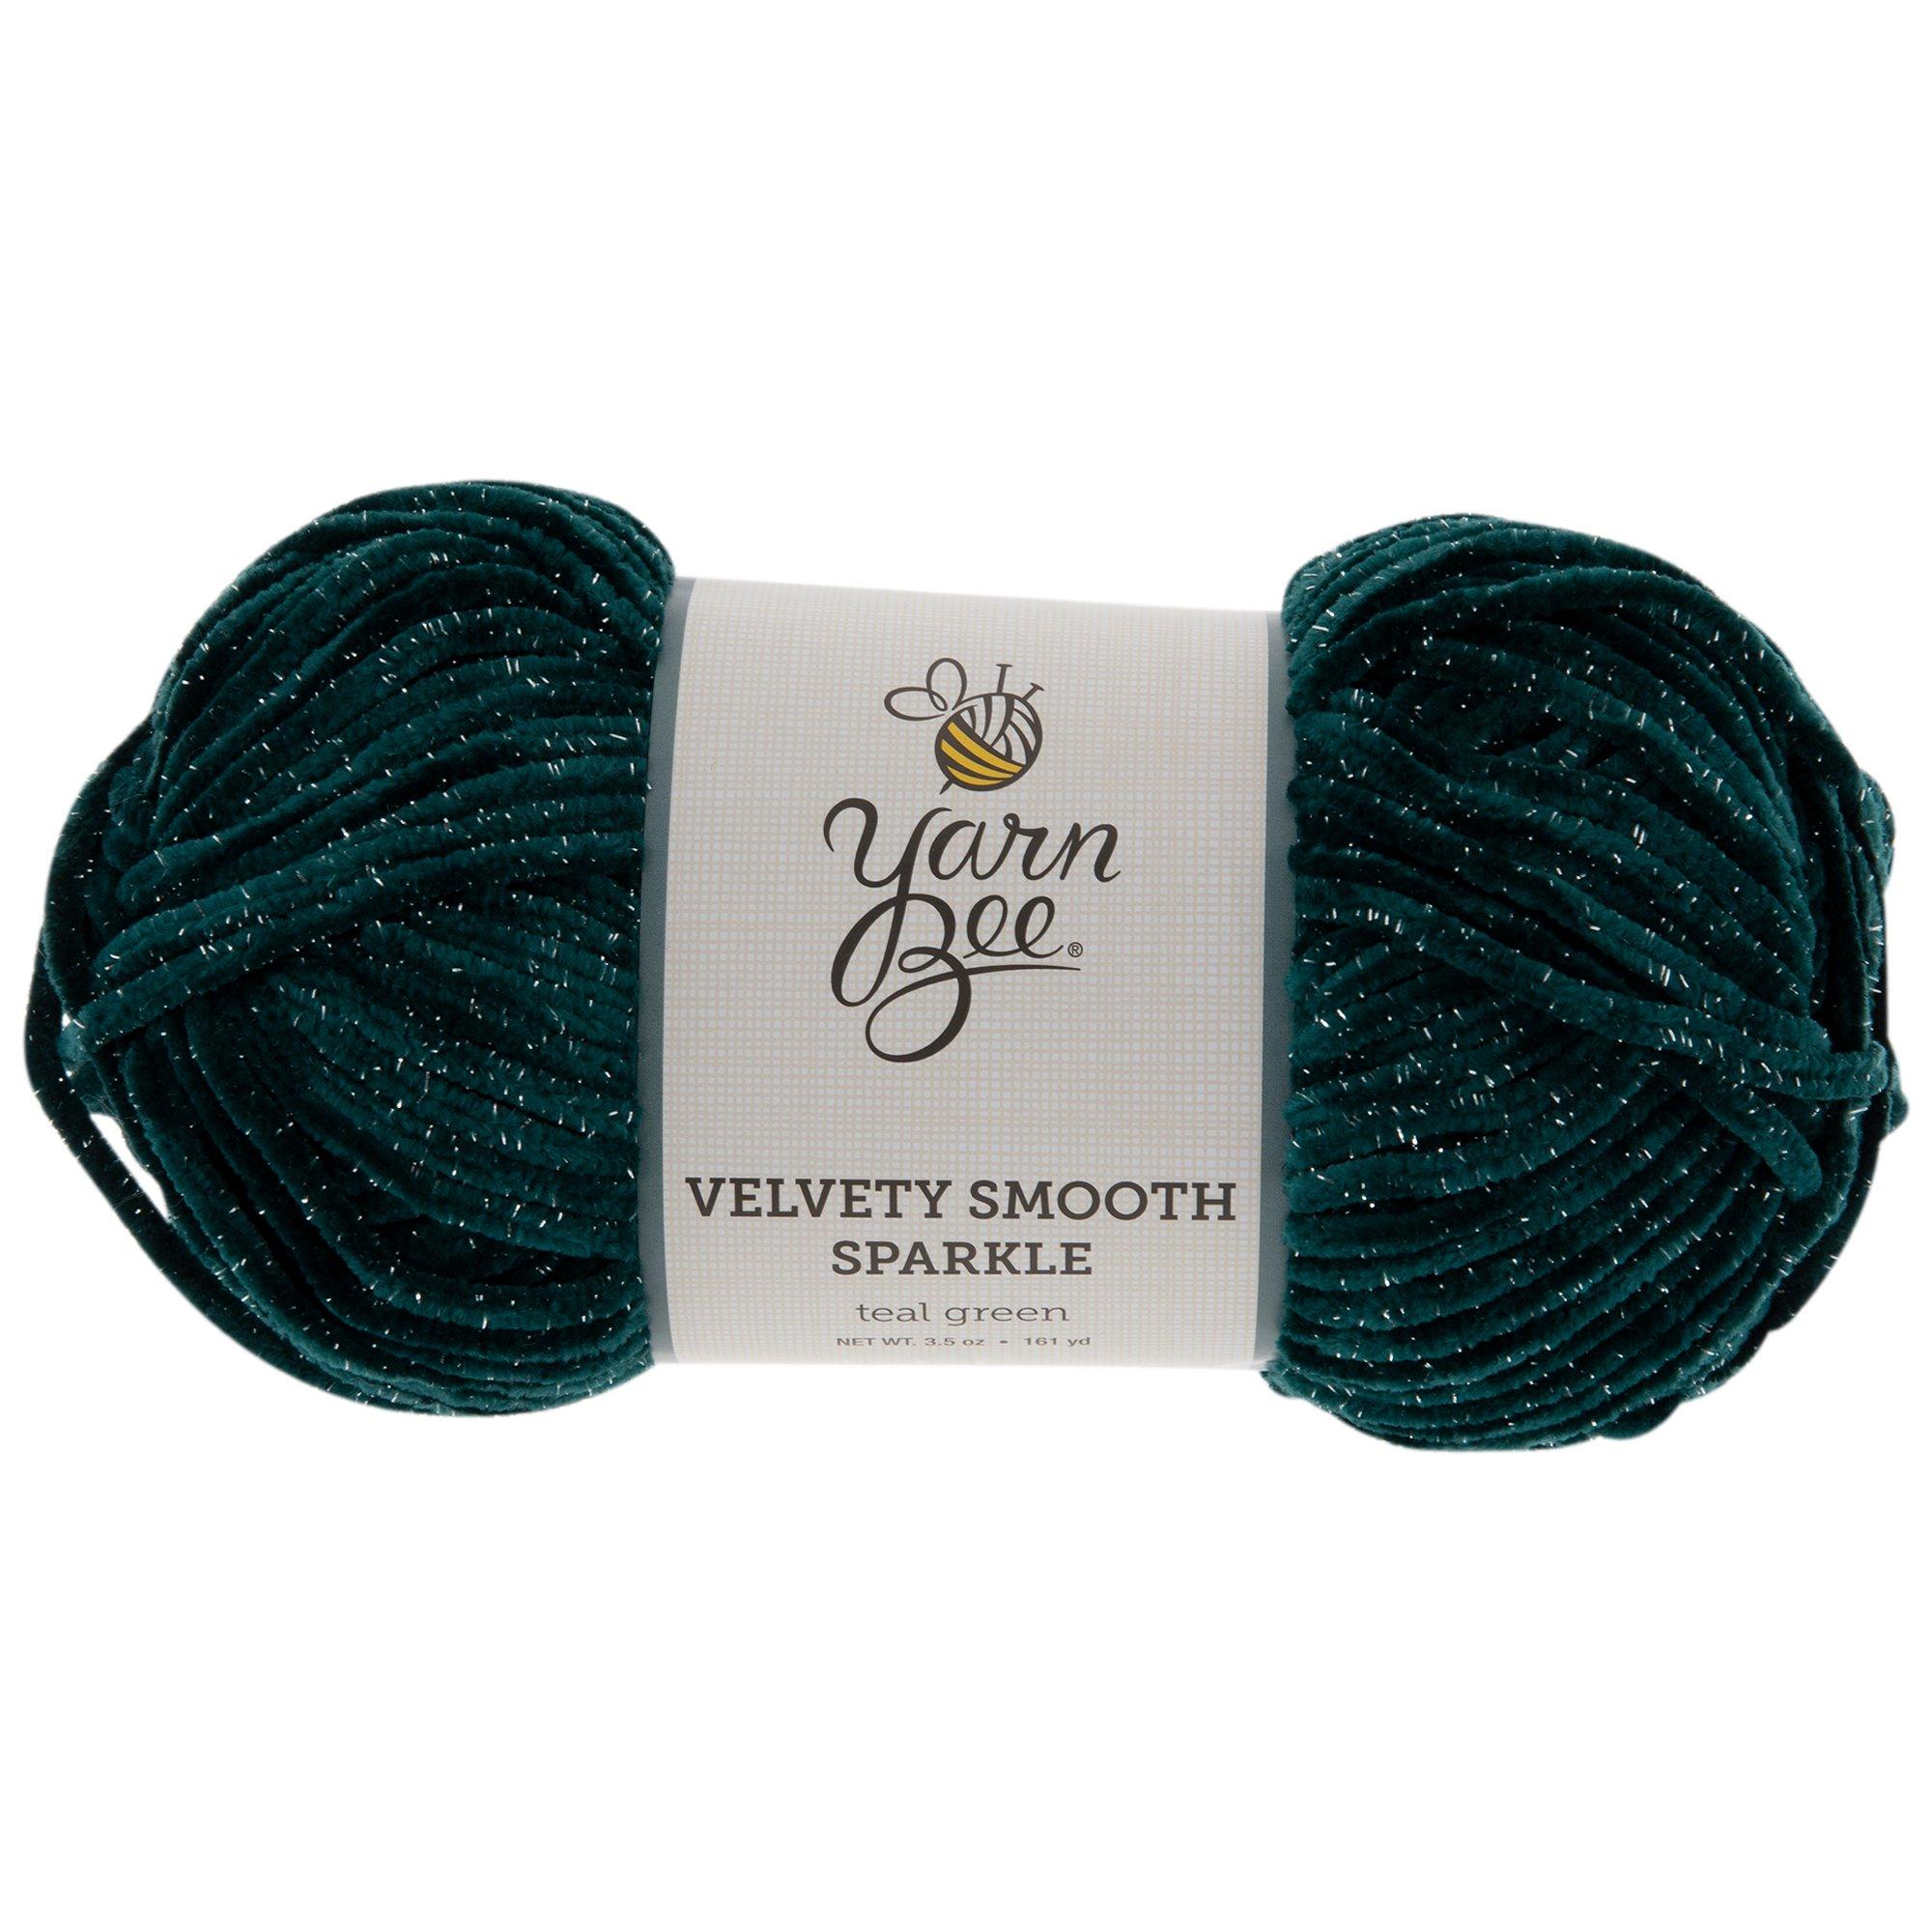 Yarn Bee Chunky Knit Velvet Yarn, Hobby Lobby